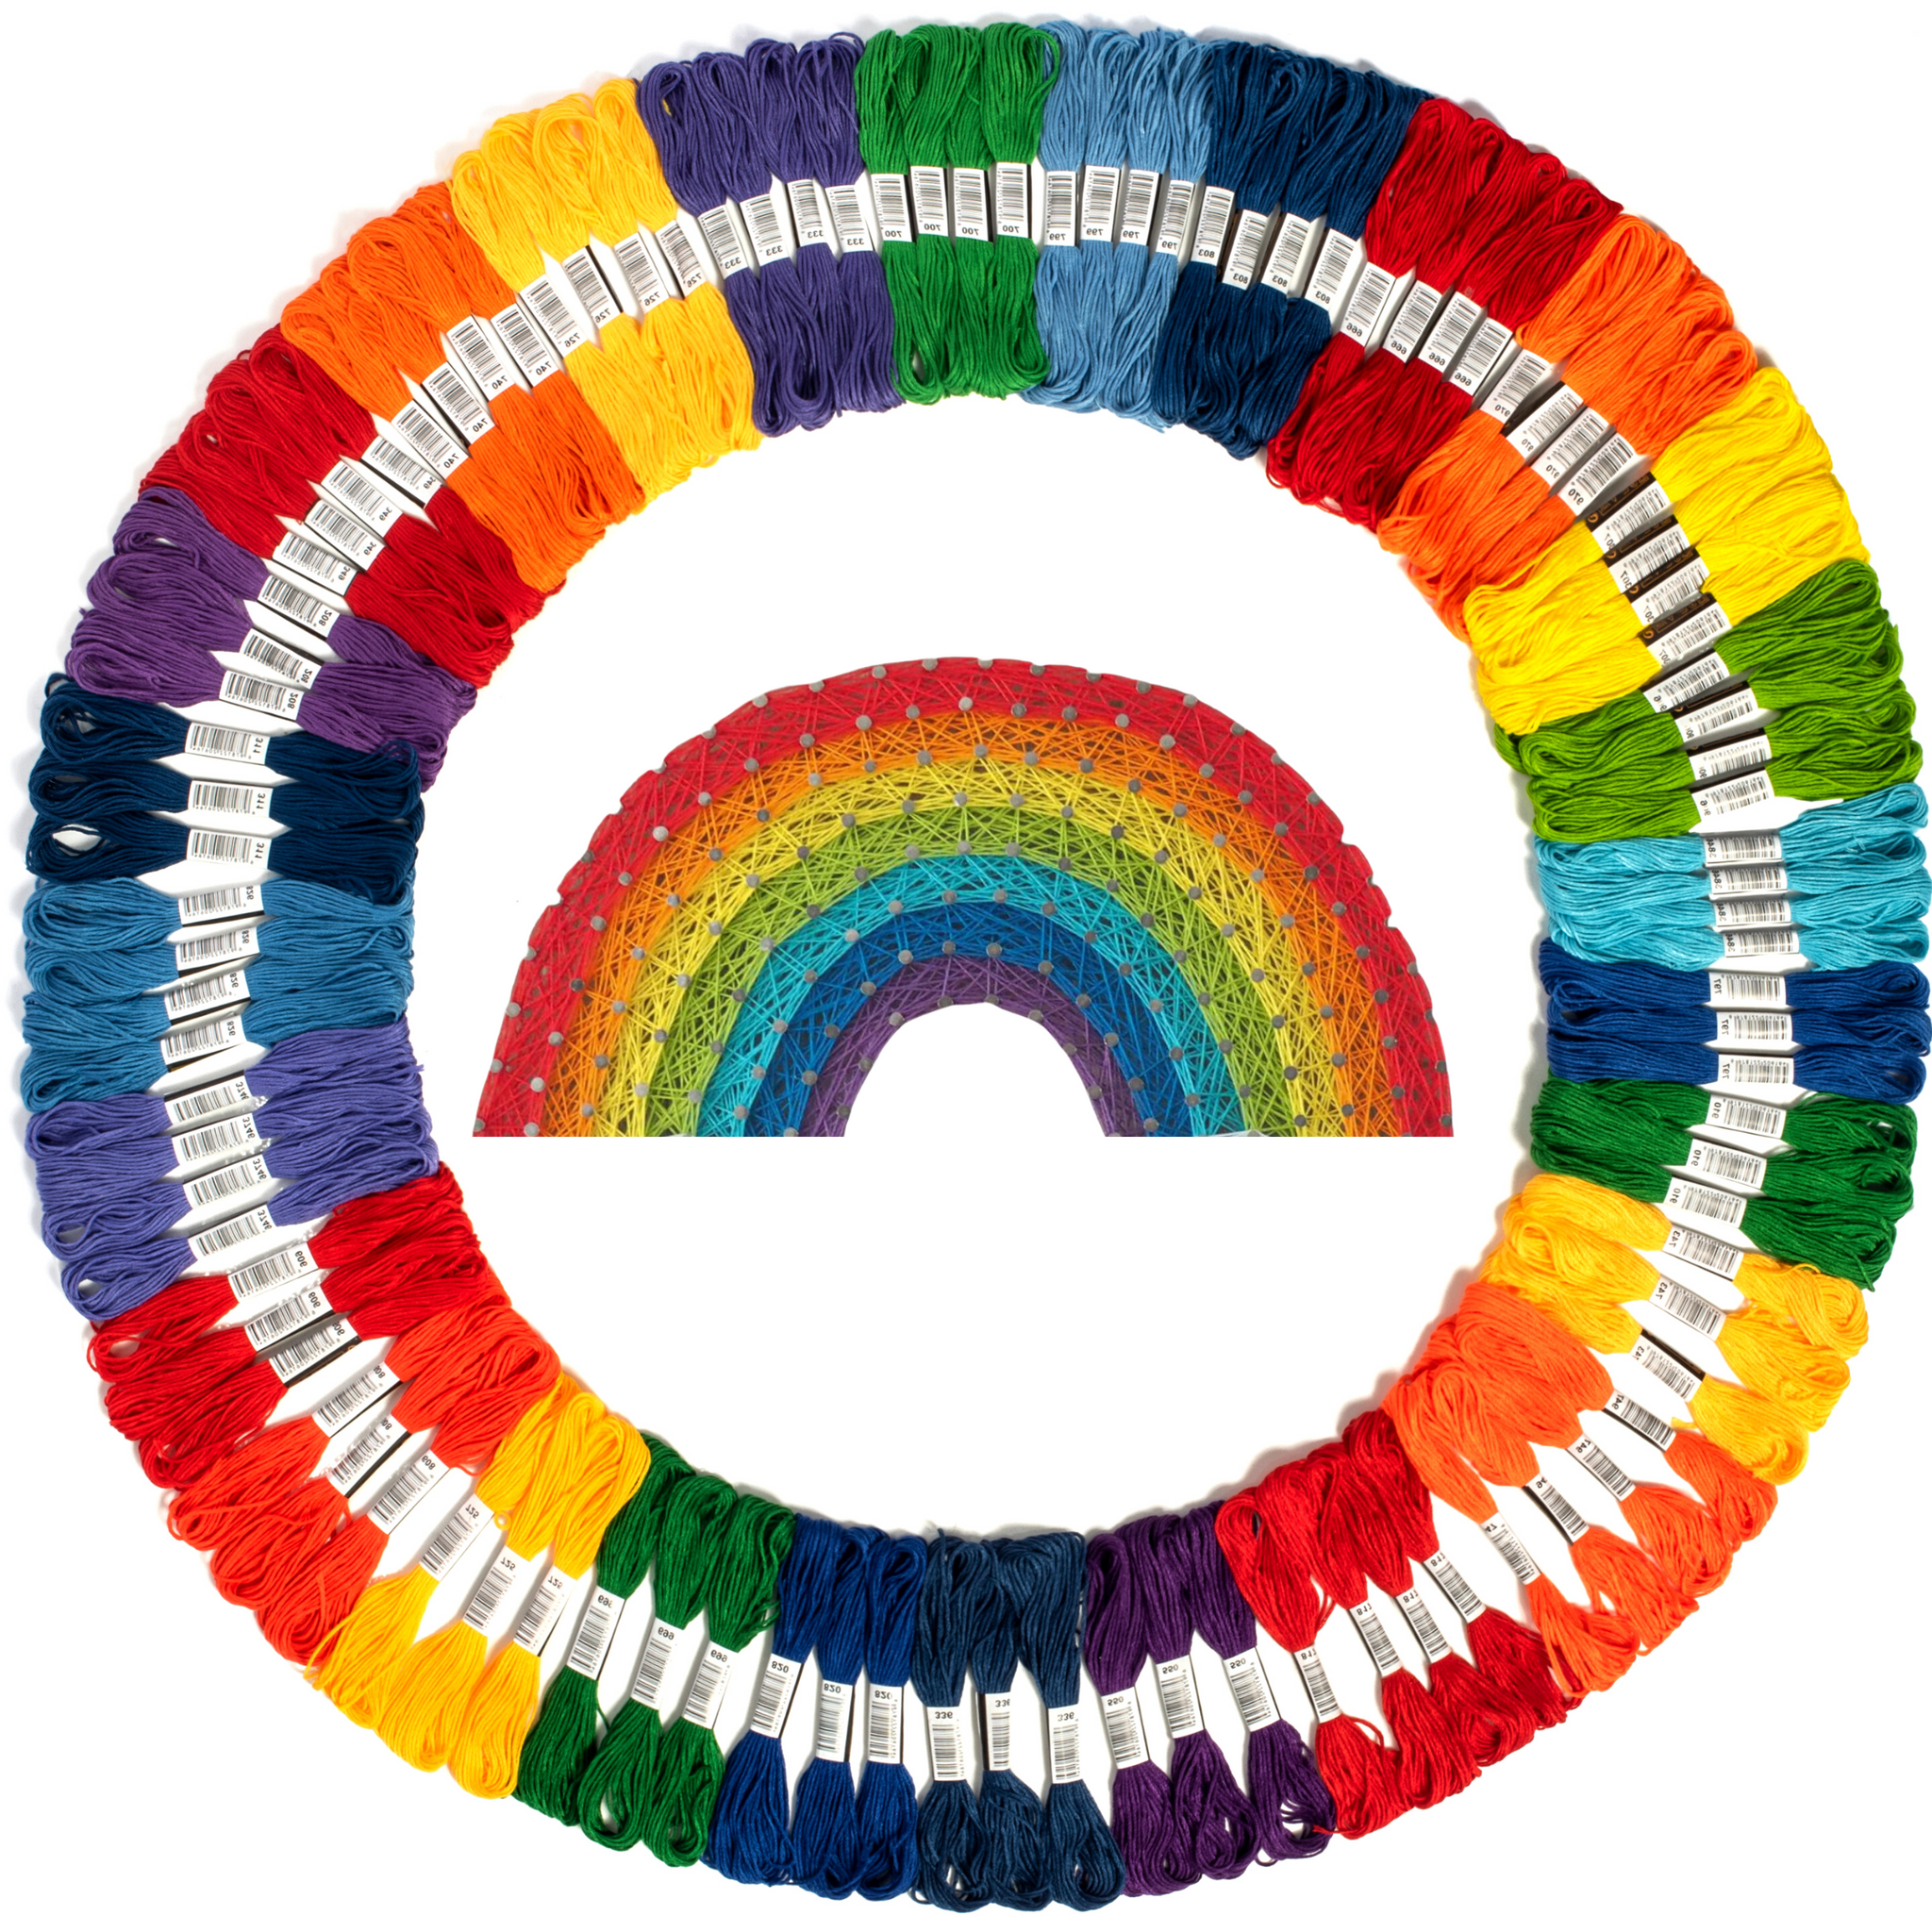 Embroidery Thread Friendship Bracelet Kit - Rainbow Theme